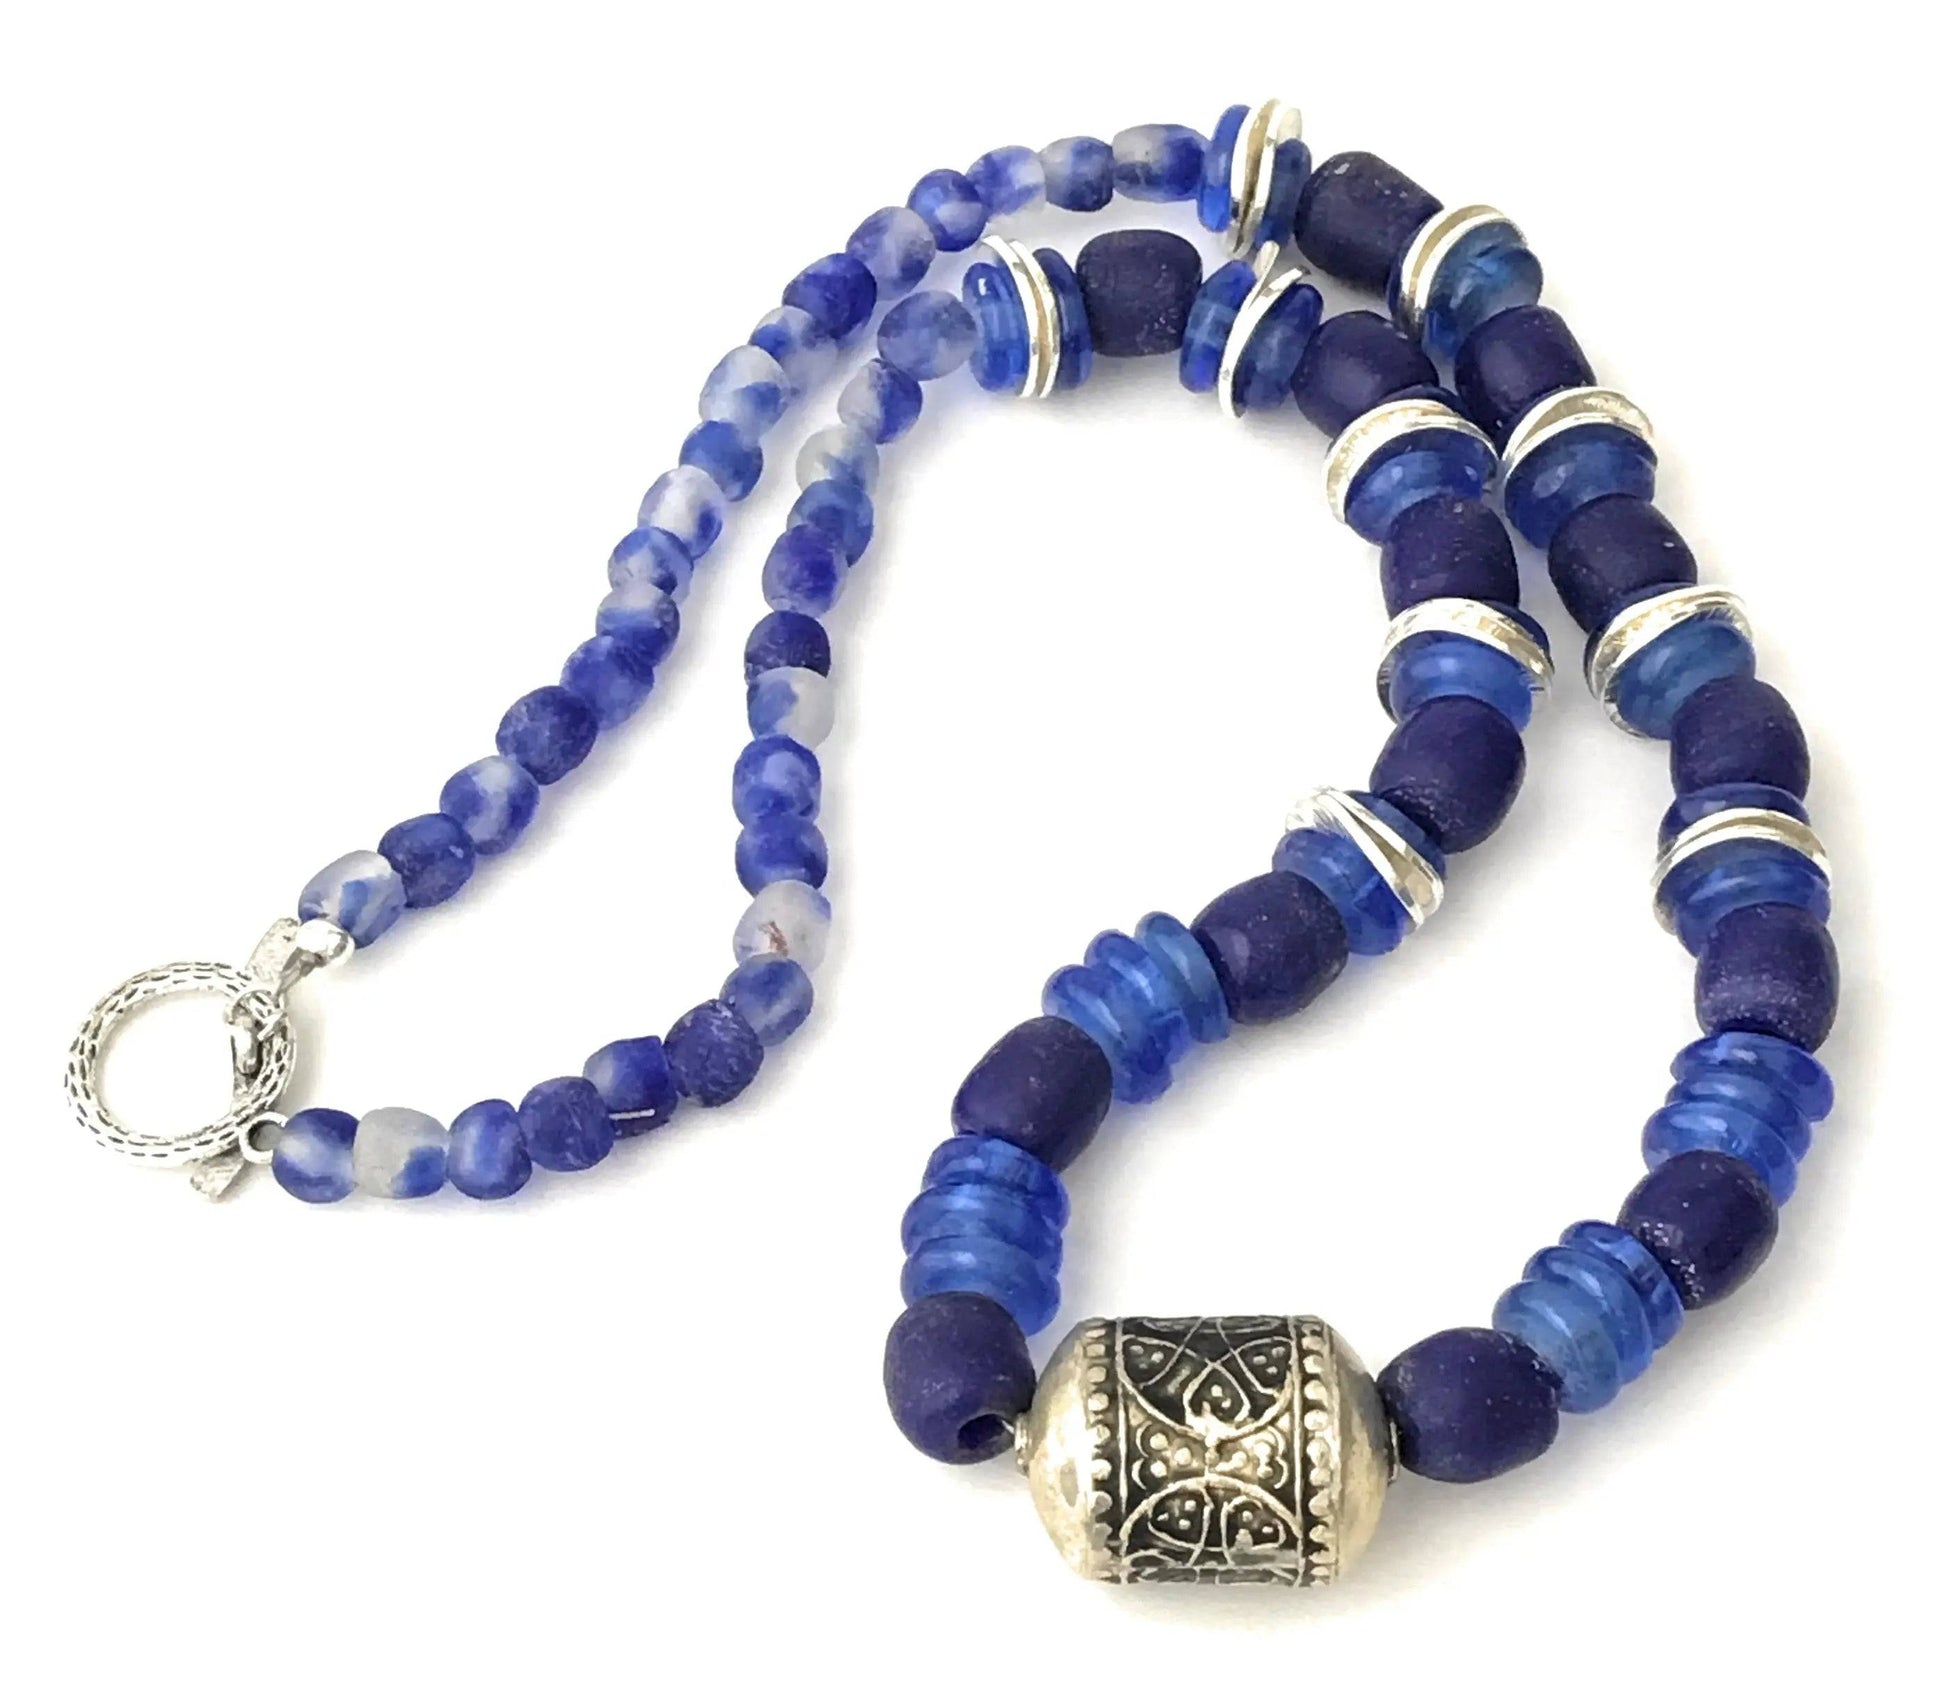 Berber Bead Necklace - Uplift Beads